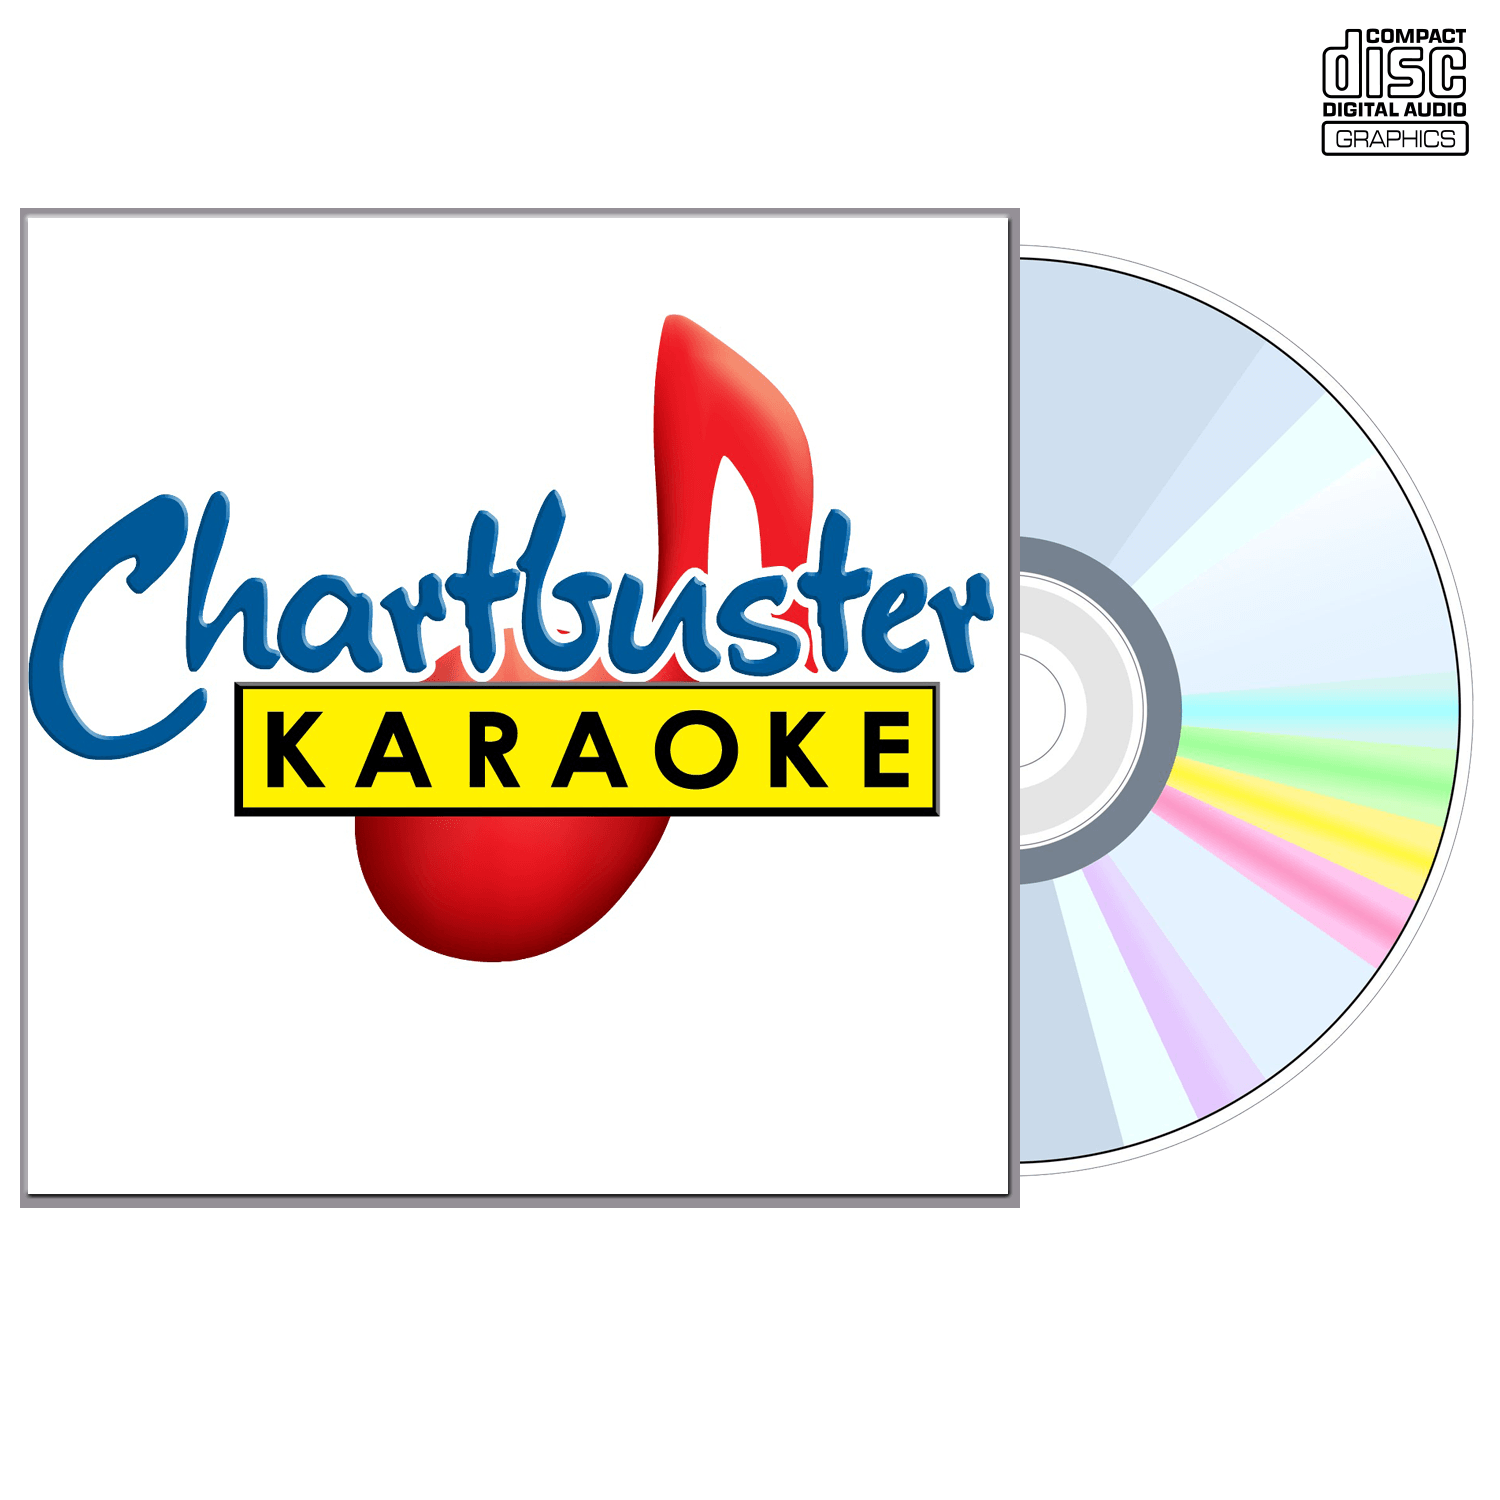 The Specials - CD+G - Chartbuster Karaoke - Karaoke Home Entertainment